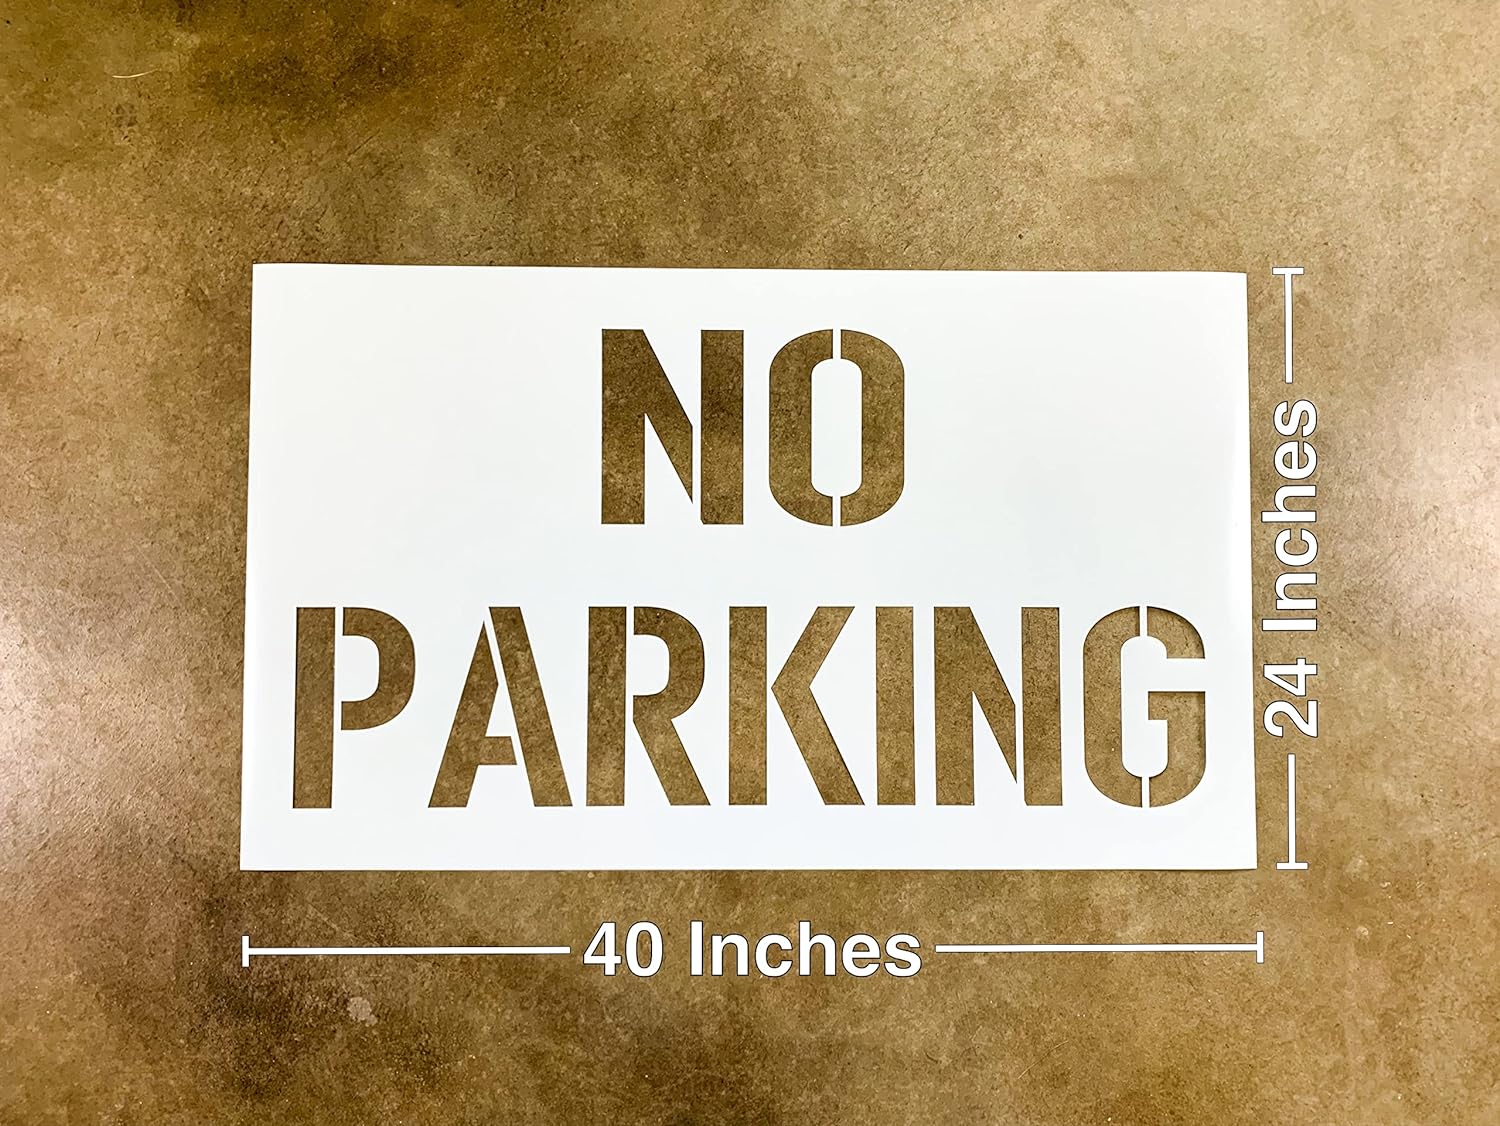 8 Inch Large Parking Lot Stencils, 10 MIL Thick Reusable Mylar, Big  Letter Stencils, No Parking Stencils For Parking Lot